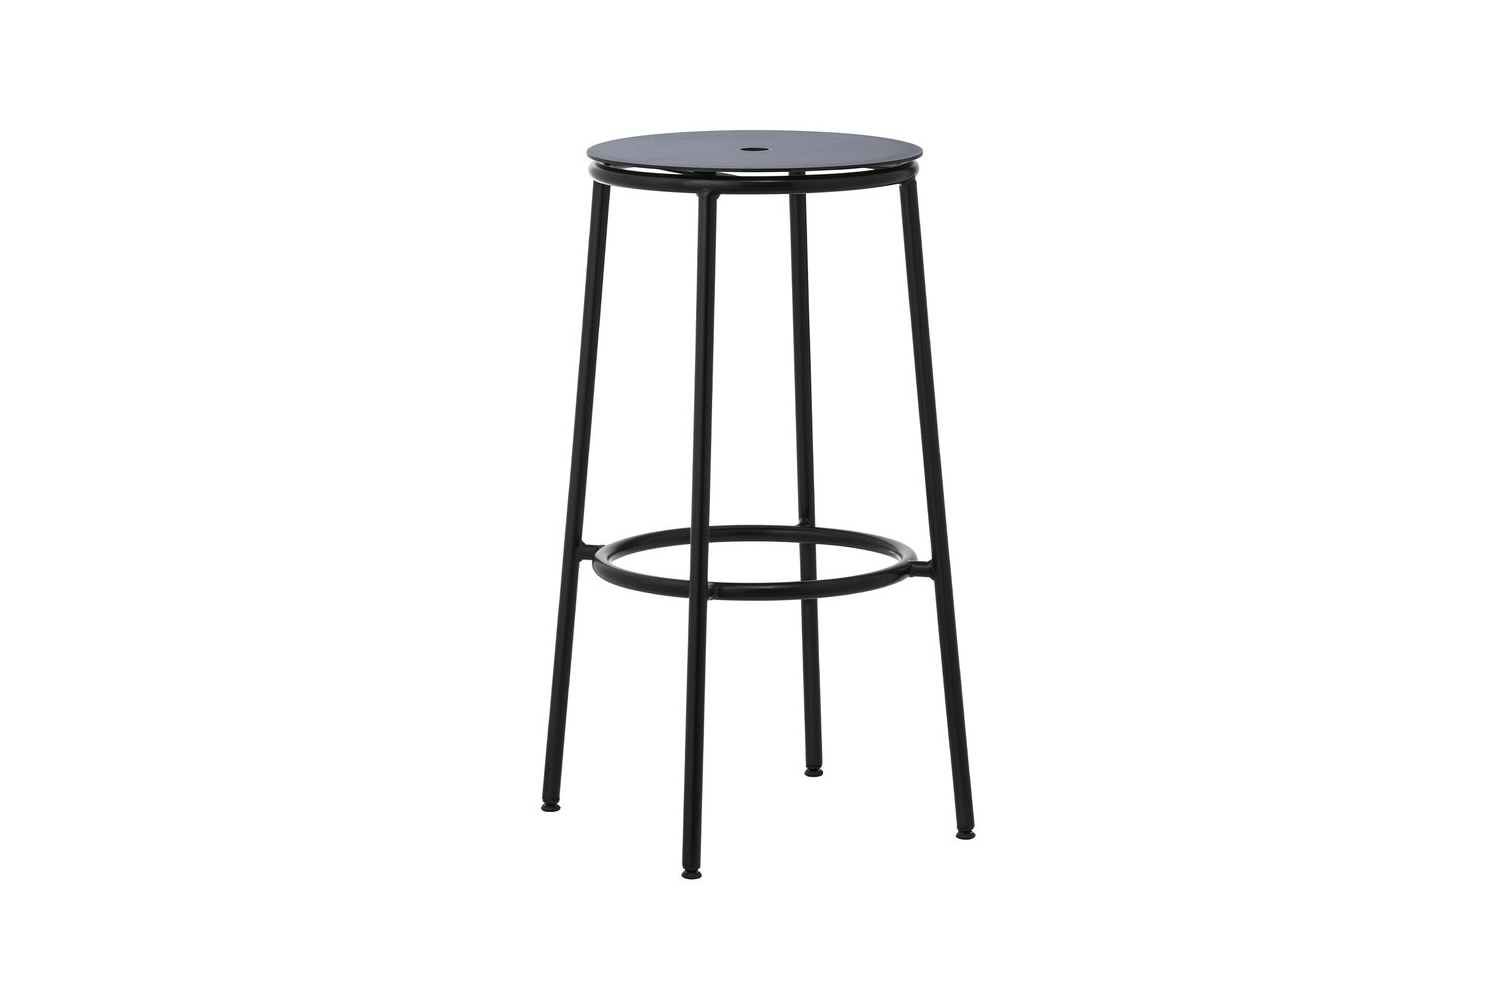 the normann copenhagen circa bar stool in black steel is designed by simon lega 16